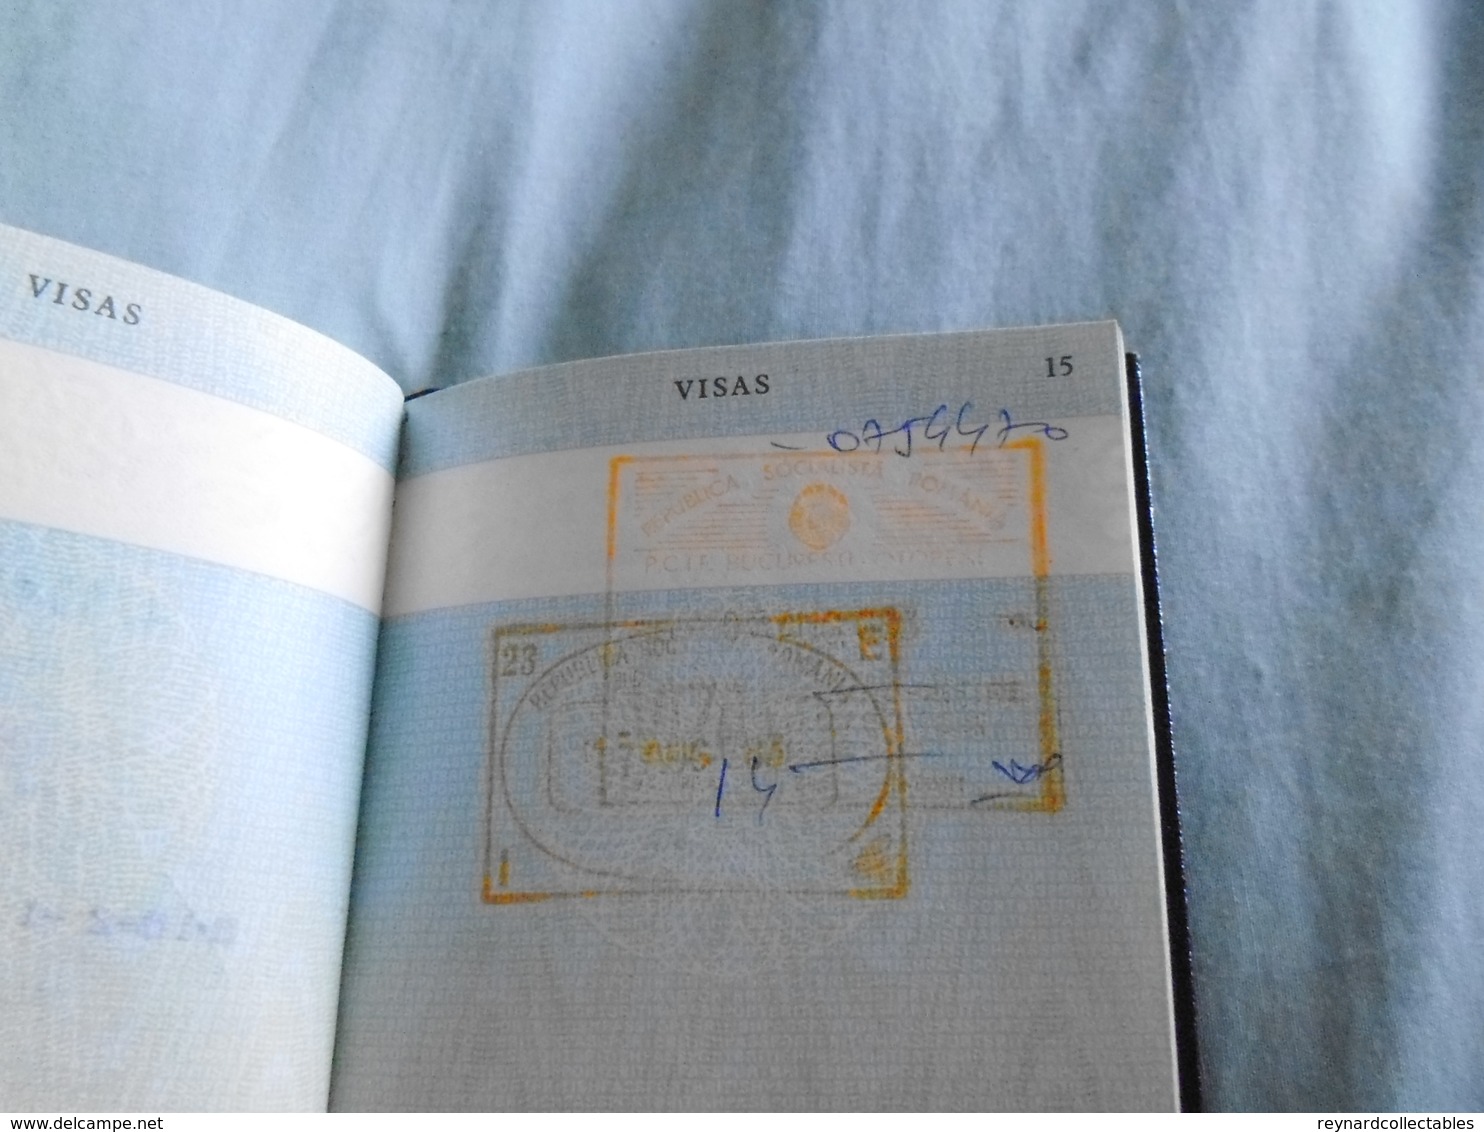 1979 British Reisepass Passport , Portugal, Canada,Bergen,Sweden, France,Egypt handstamps +++